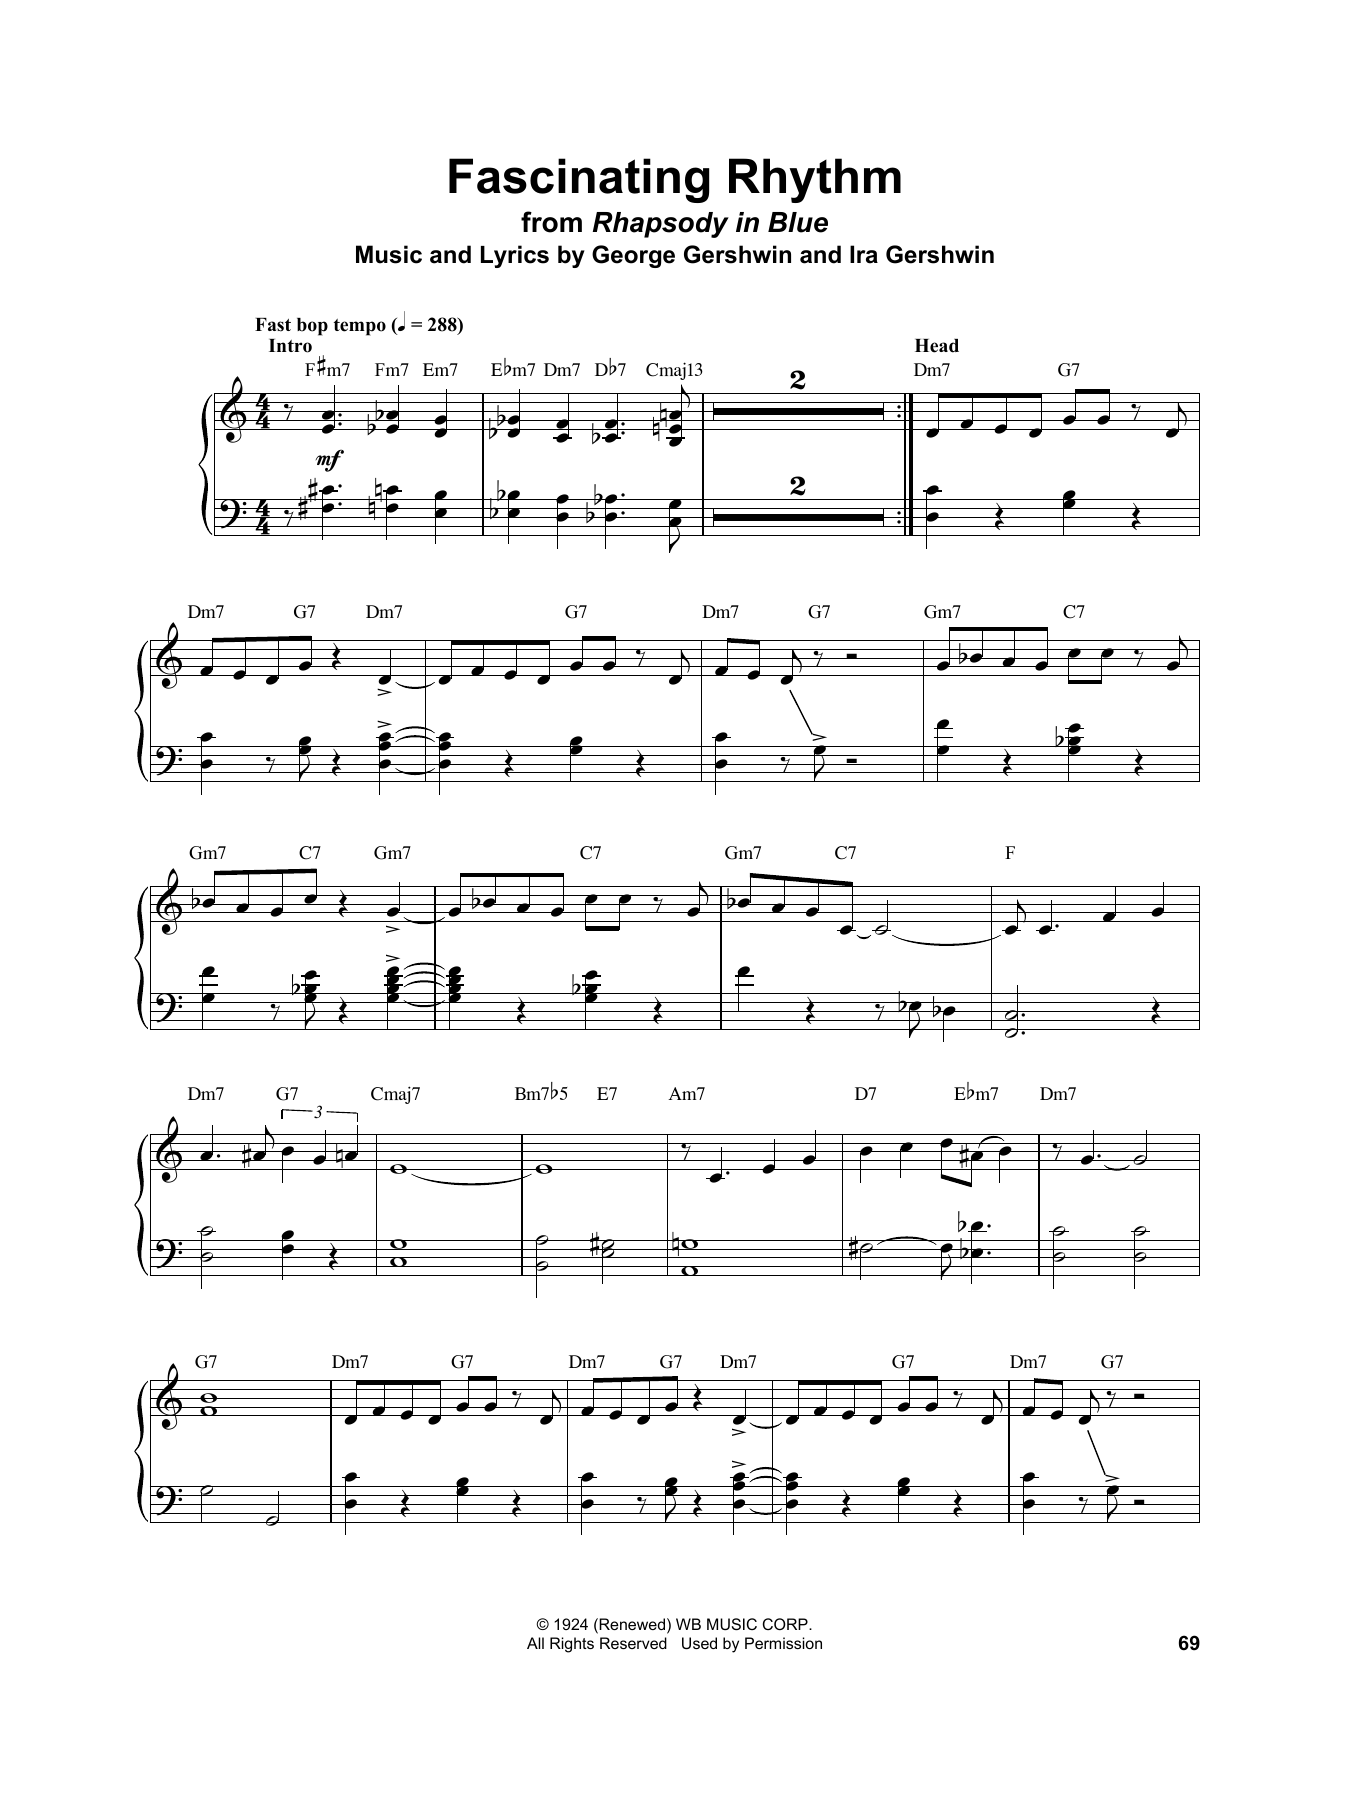 Download Vince Guaraldi Fascinating Rhythm Sheet Music